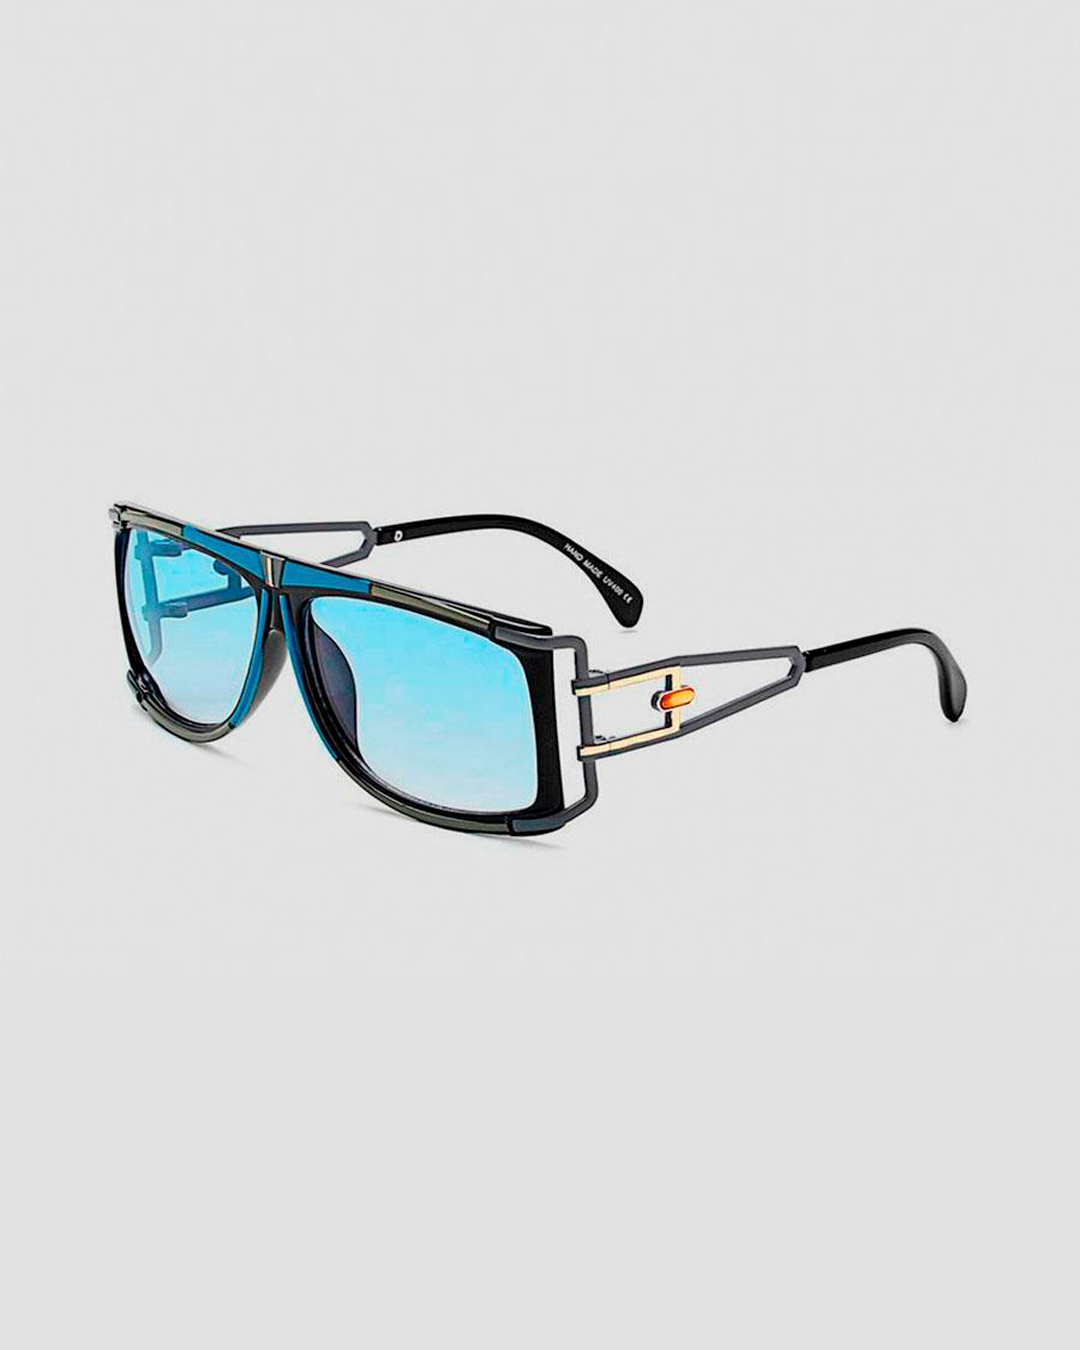 Jono Starsmore Sunglasses